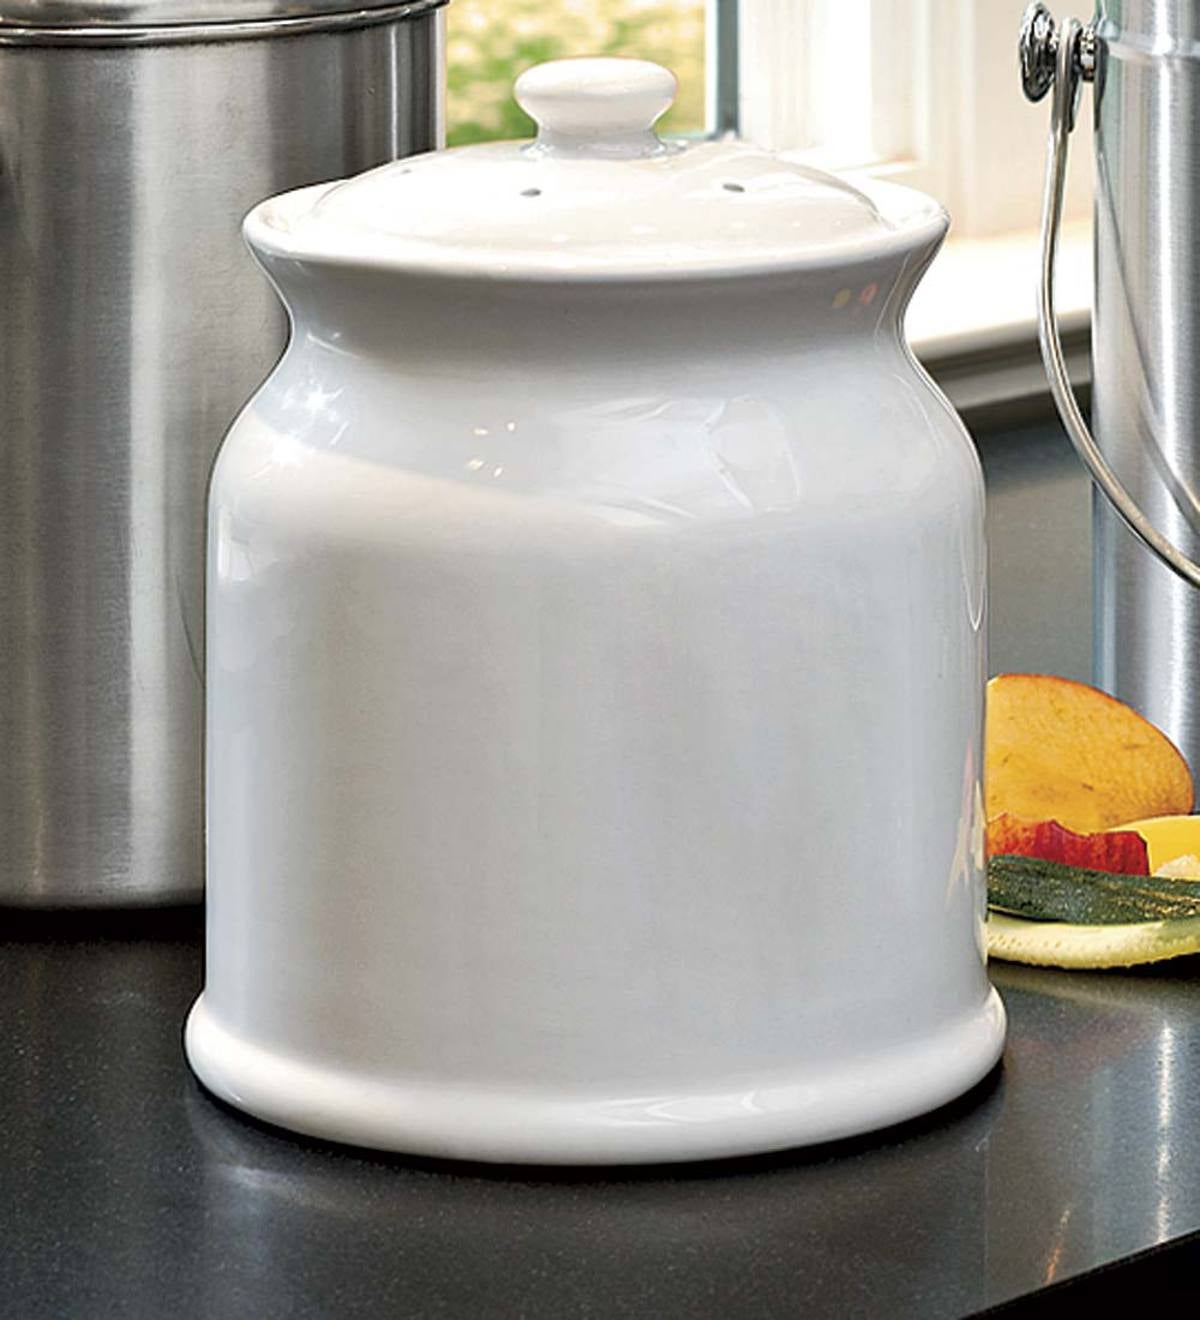 Counter Top Ceramic Compost Crock Kit